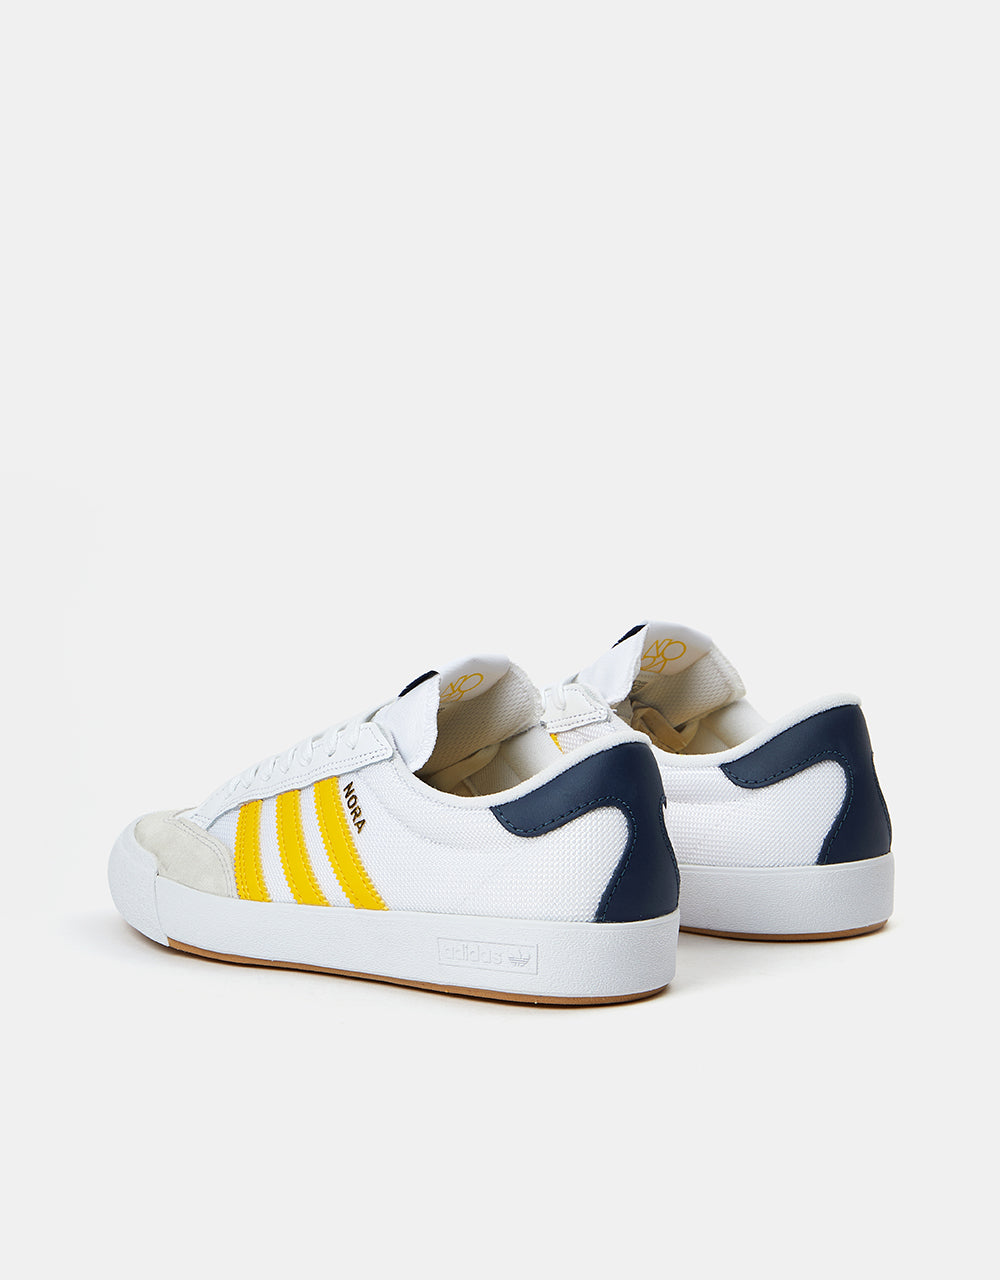 adidas Nora Skate Shoes - White/Bold Gold/Collegiate Navy